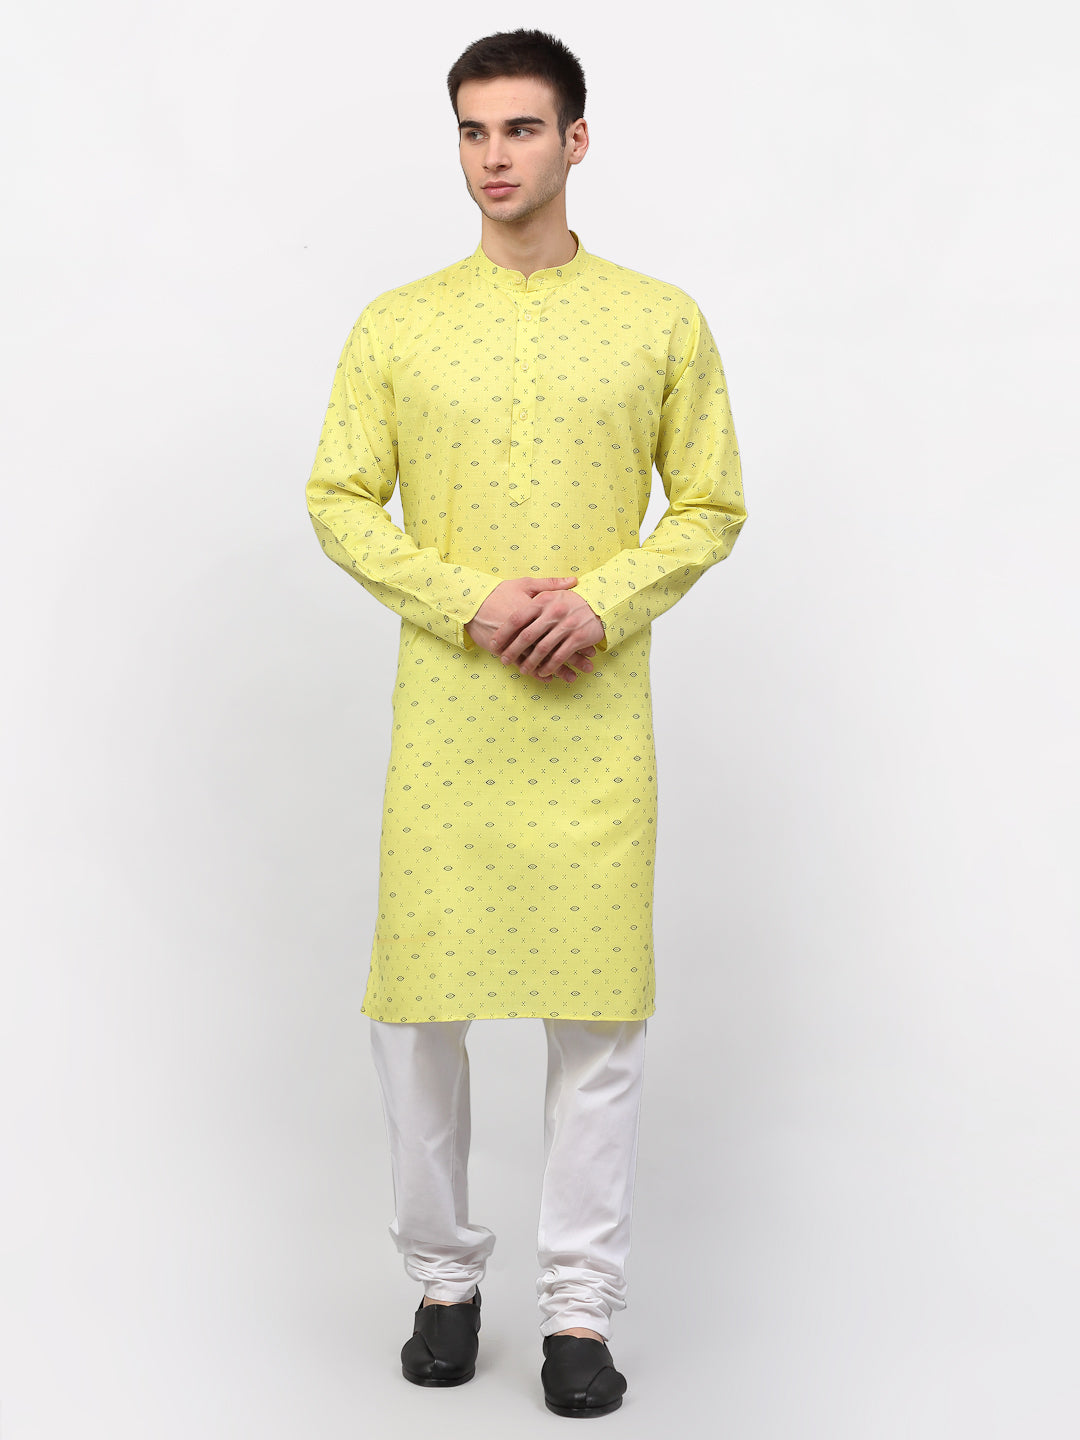 Jompers Men's Lemon Printed Cotton Kurta Payjama Sets